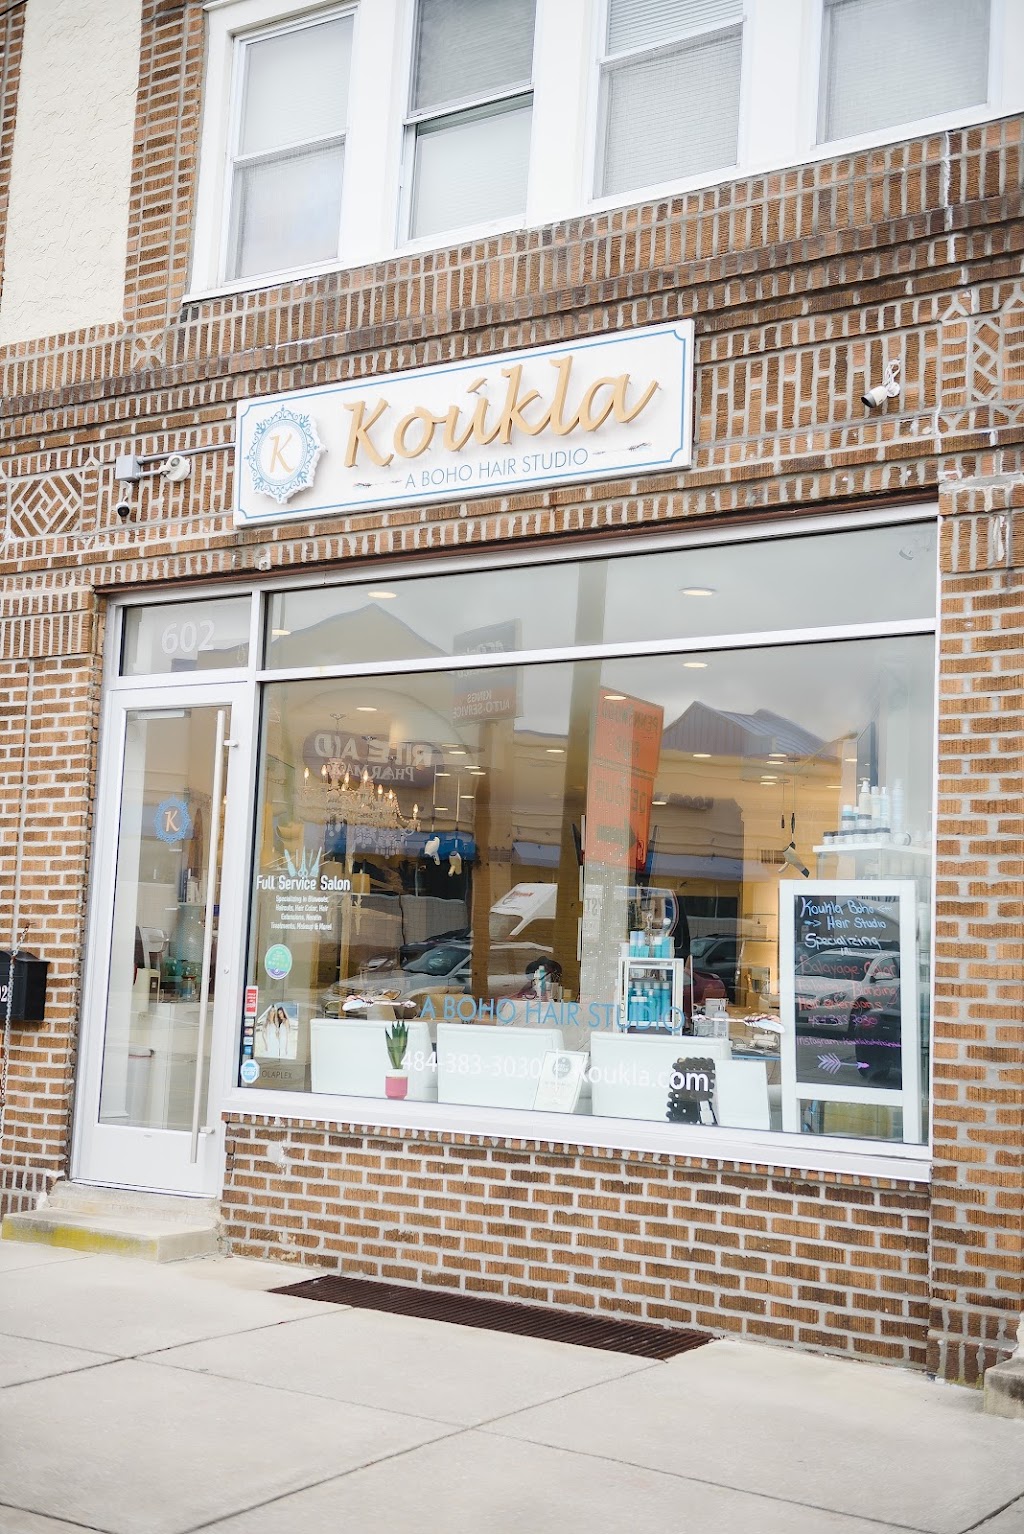 Koukla - A Boho Hair Studio | 4885 West Chester Pike, Newtown Square, PA 19073 | Phone: (484) 383-3030